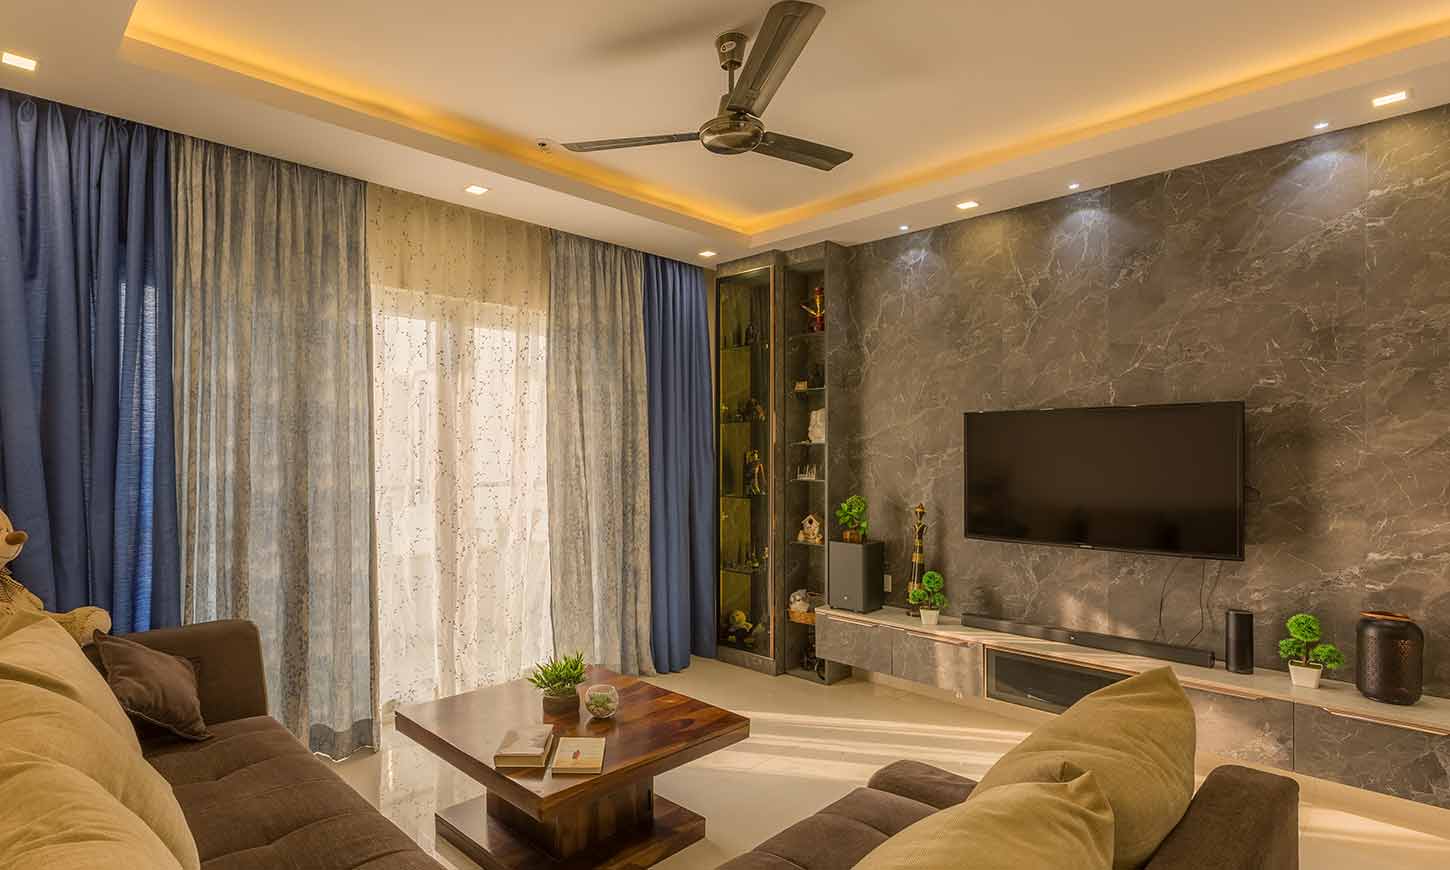 Living room interior design bangalore with a tv unit designed by home interior designers in bangalore